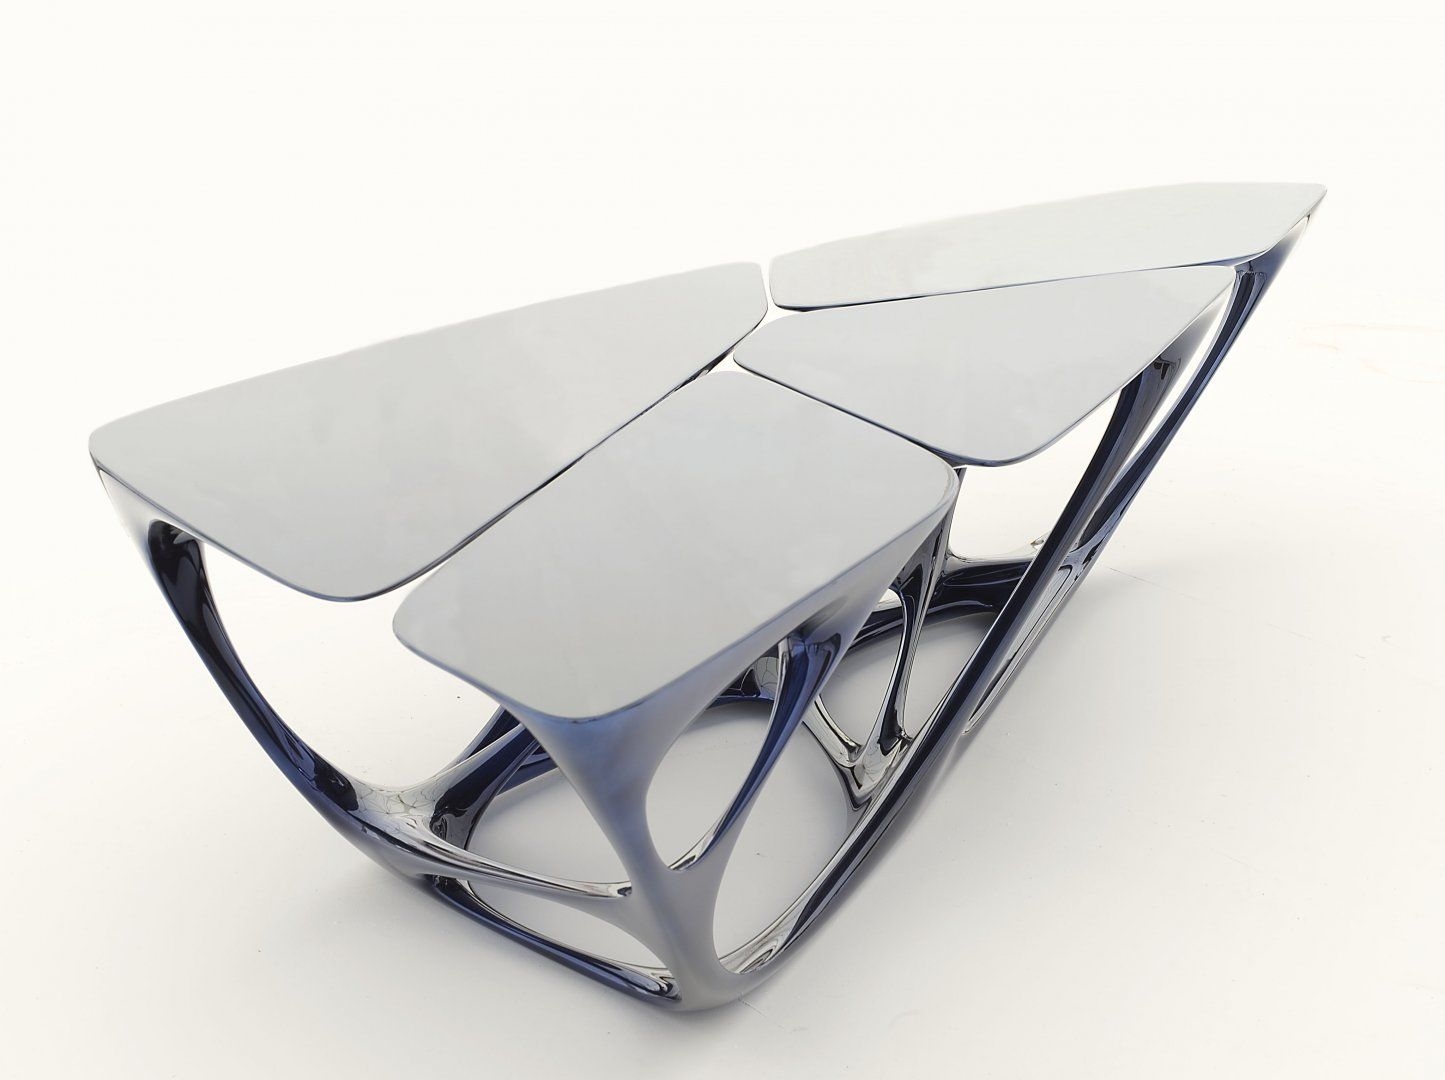 mesa-table-designzaha-hadid-for-vitra-tododesignarq4design-3.jpg